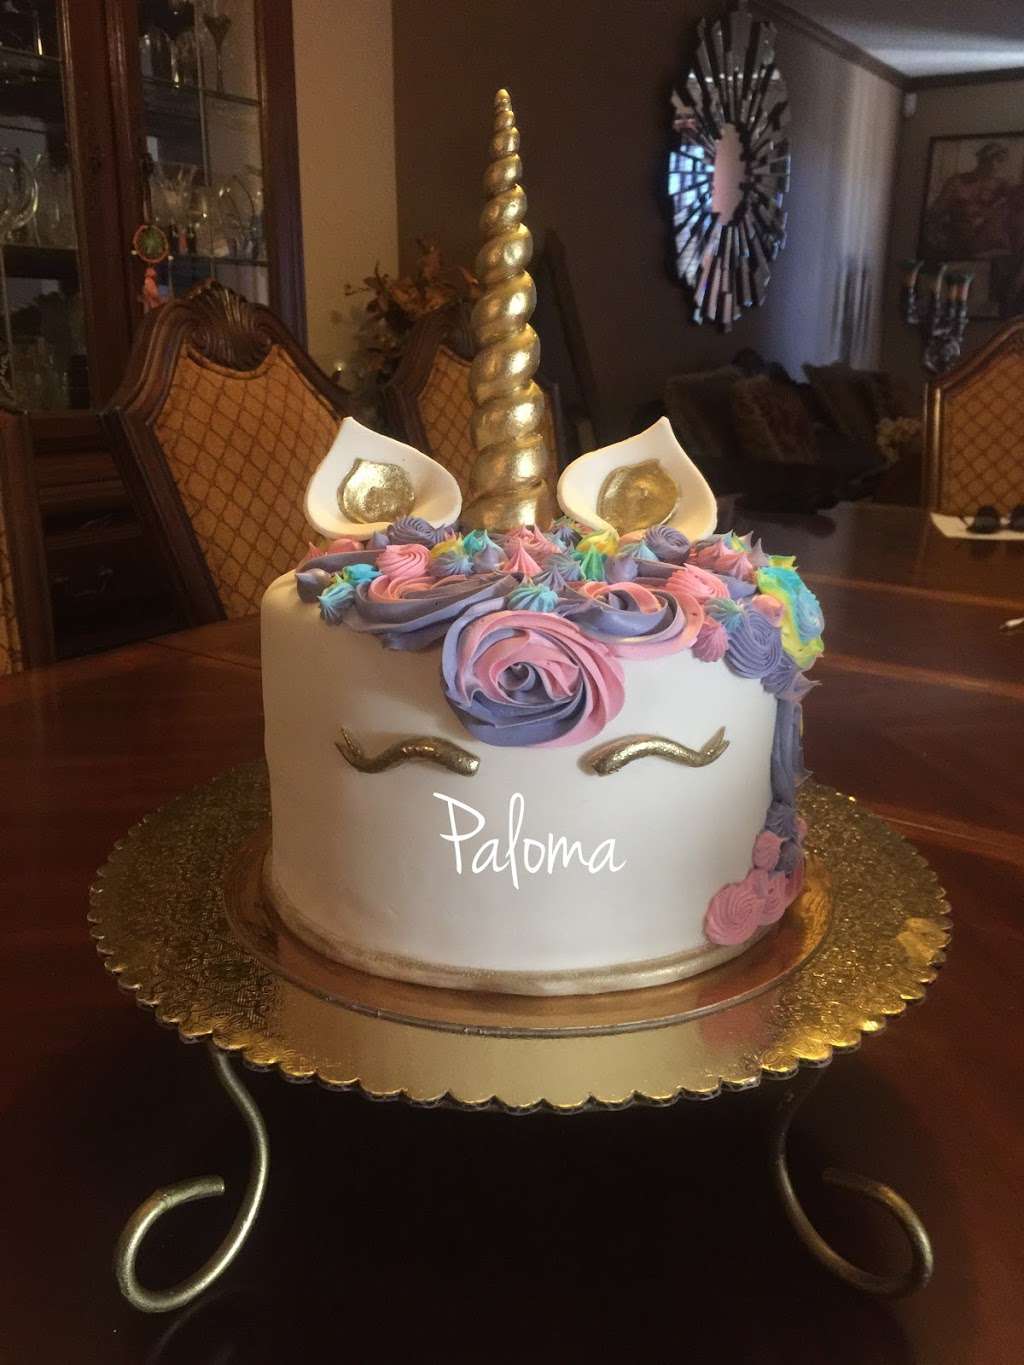 Paloma sweet cakes | Blvd. el Mirador, El Mirador, 22230 Tijuana, B.C., Mexico | Phone: 664 266 4692